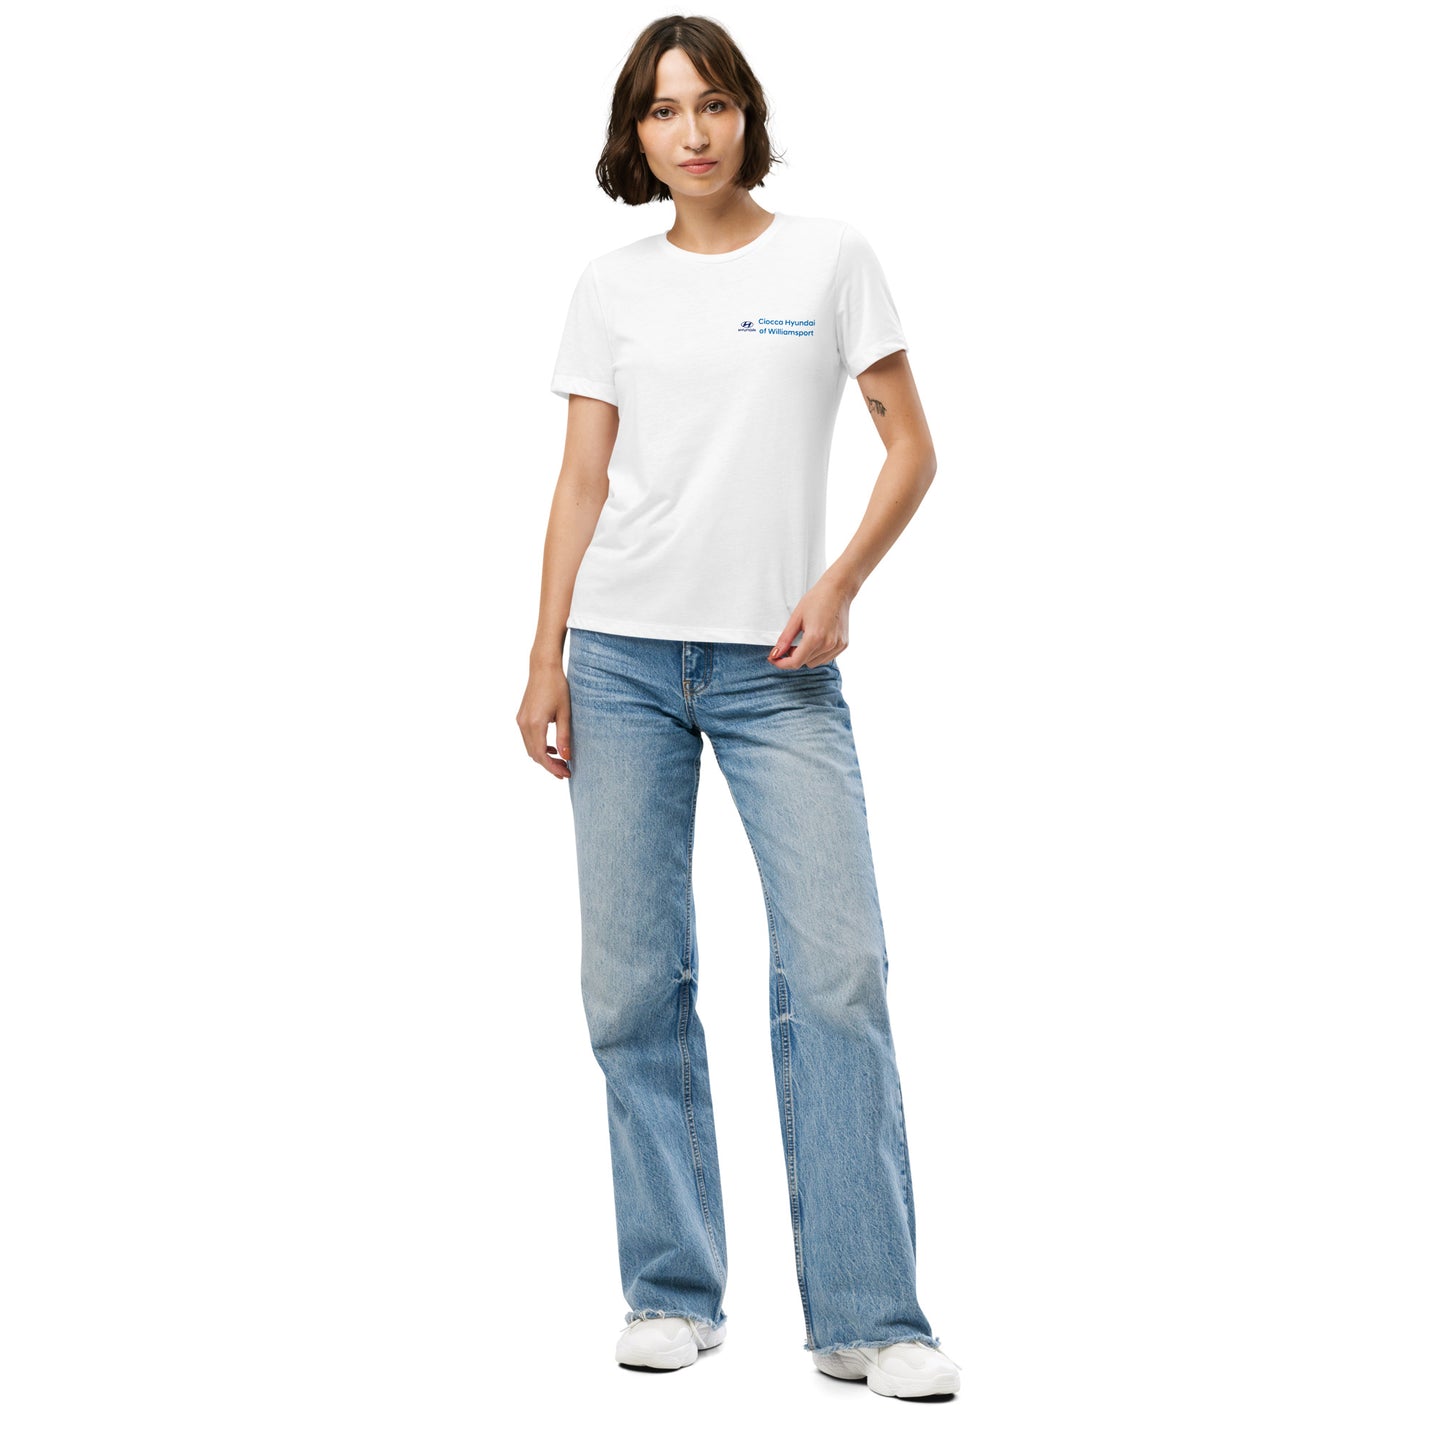 Women’s Extra-soft Triblend T-shirt - Hyundai Williamsport